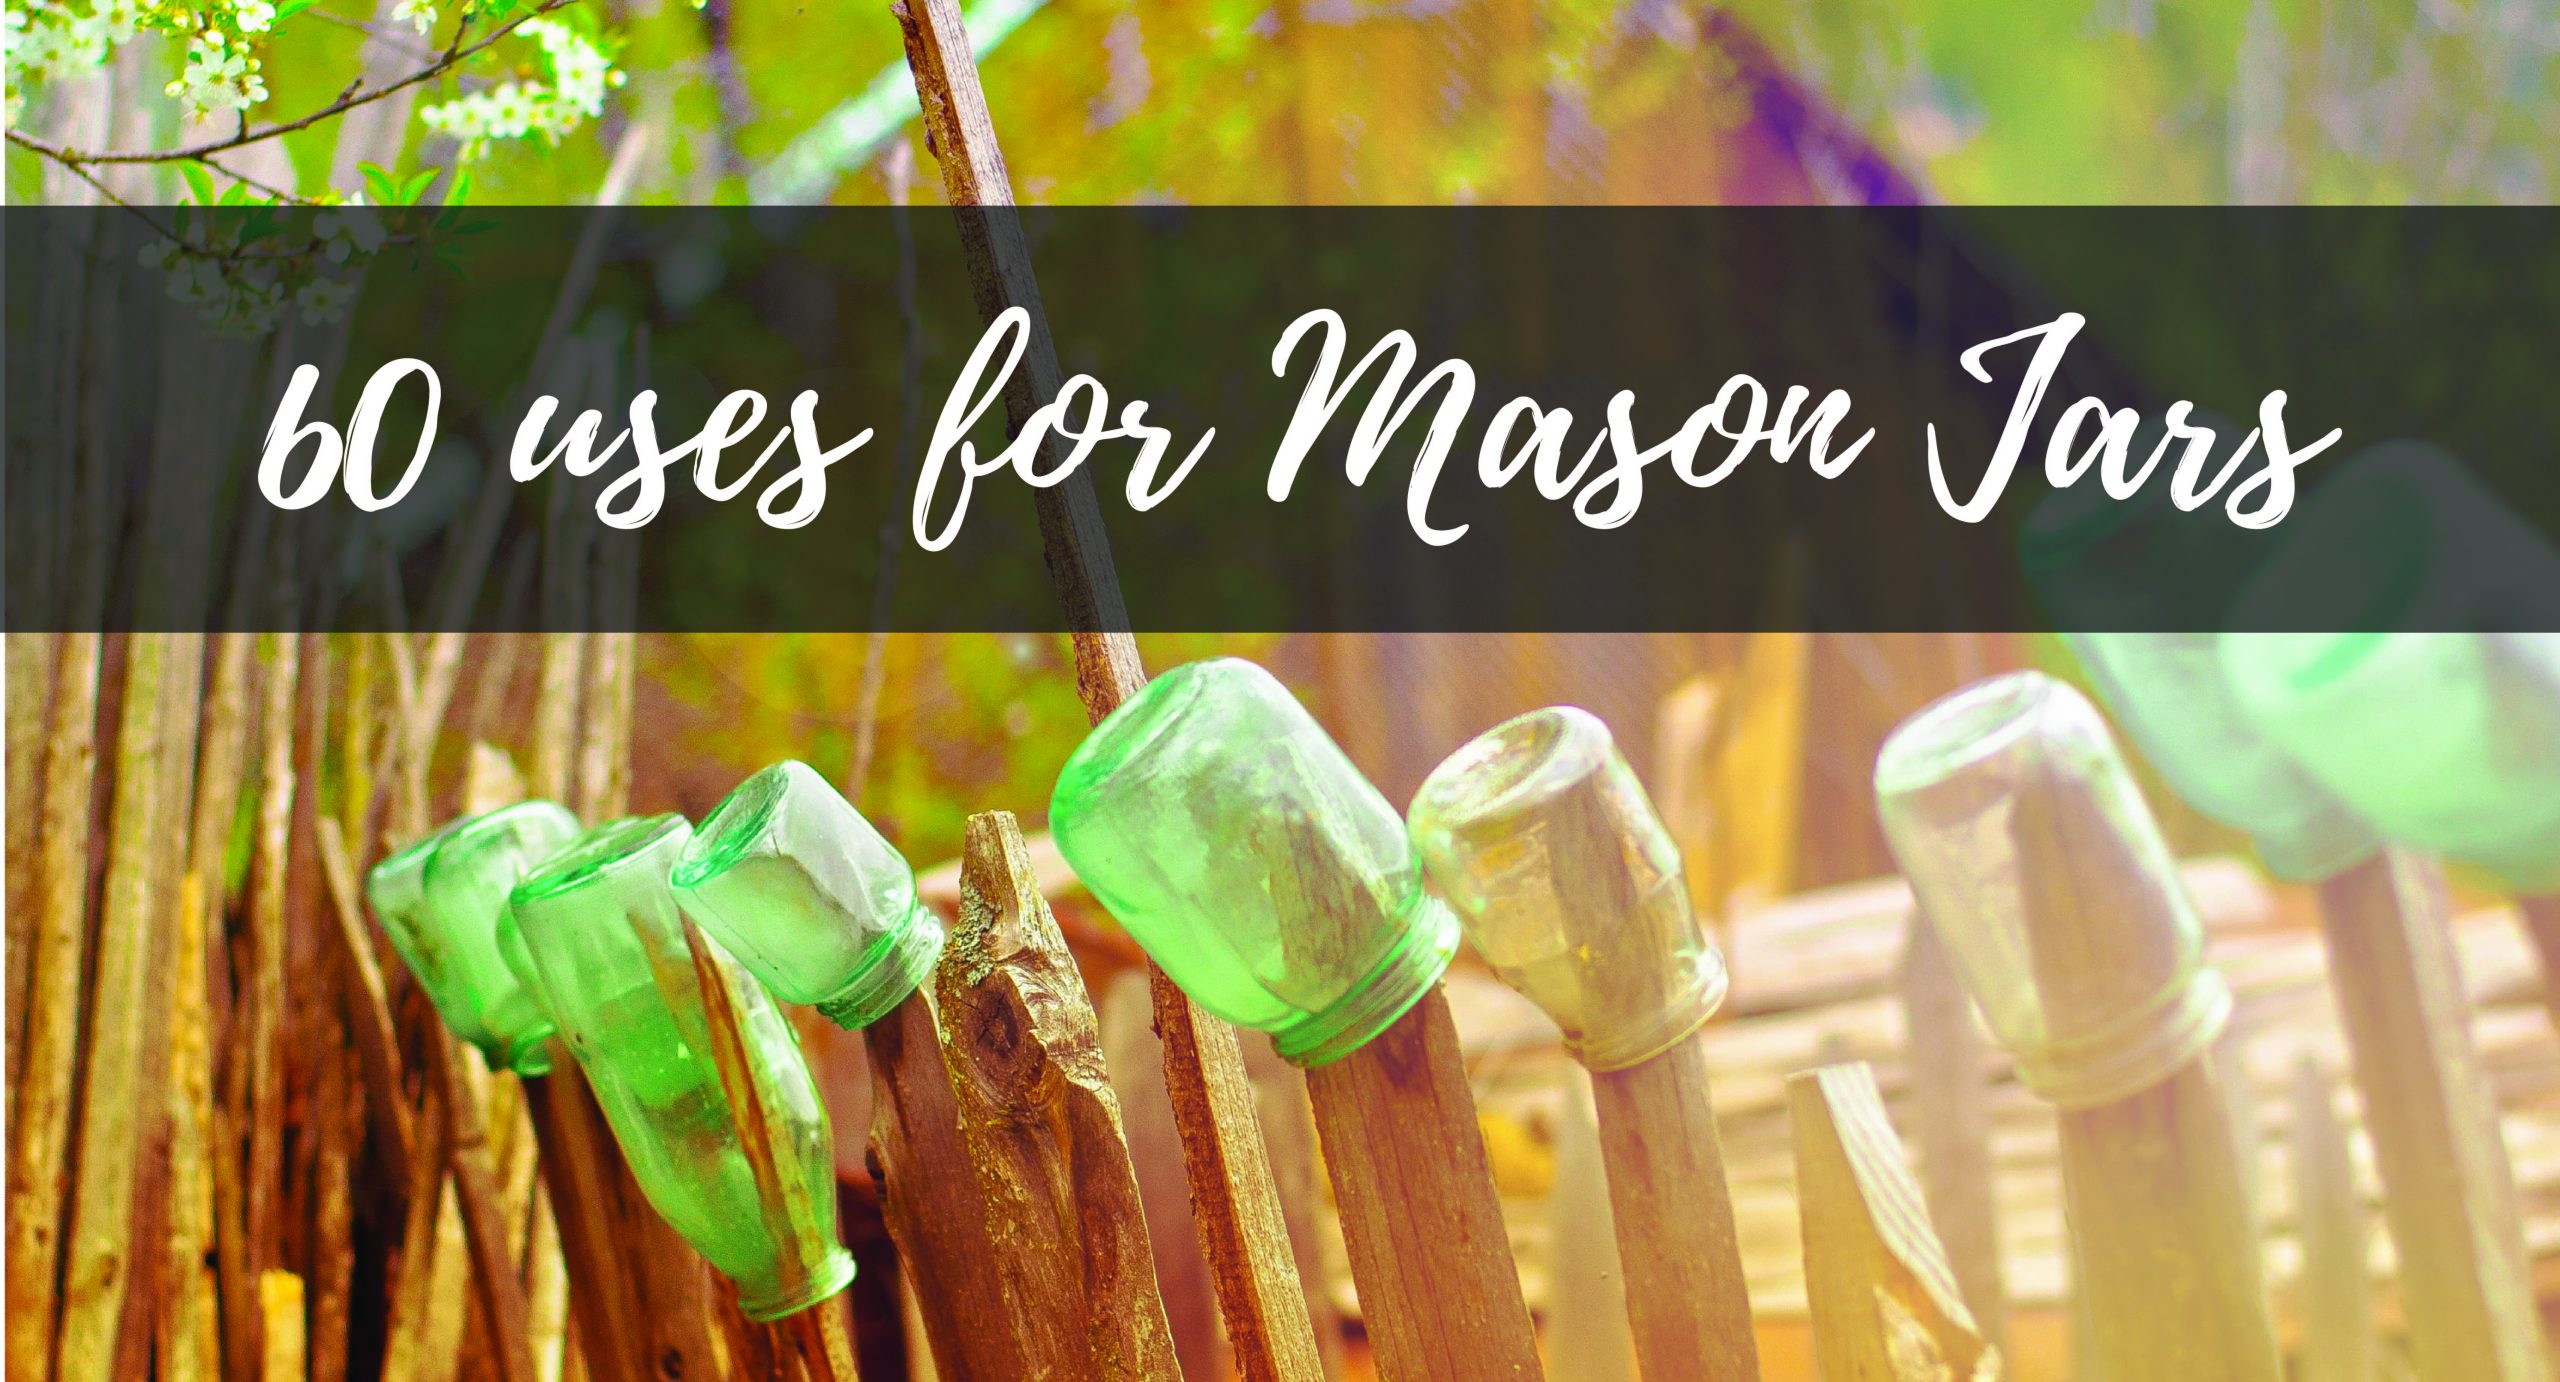 Brewing America Mason Jar Shaker Bottle, Glass Mixer Perfect as